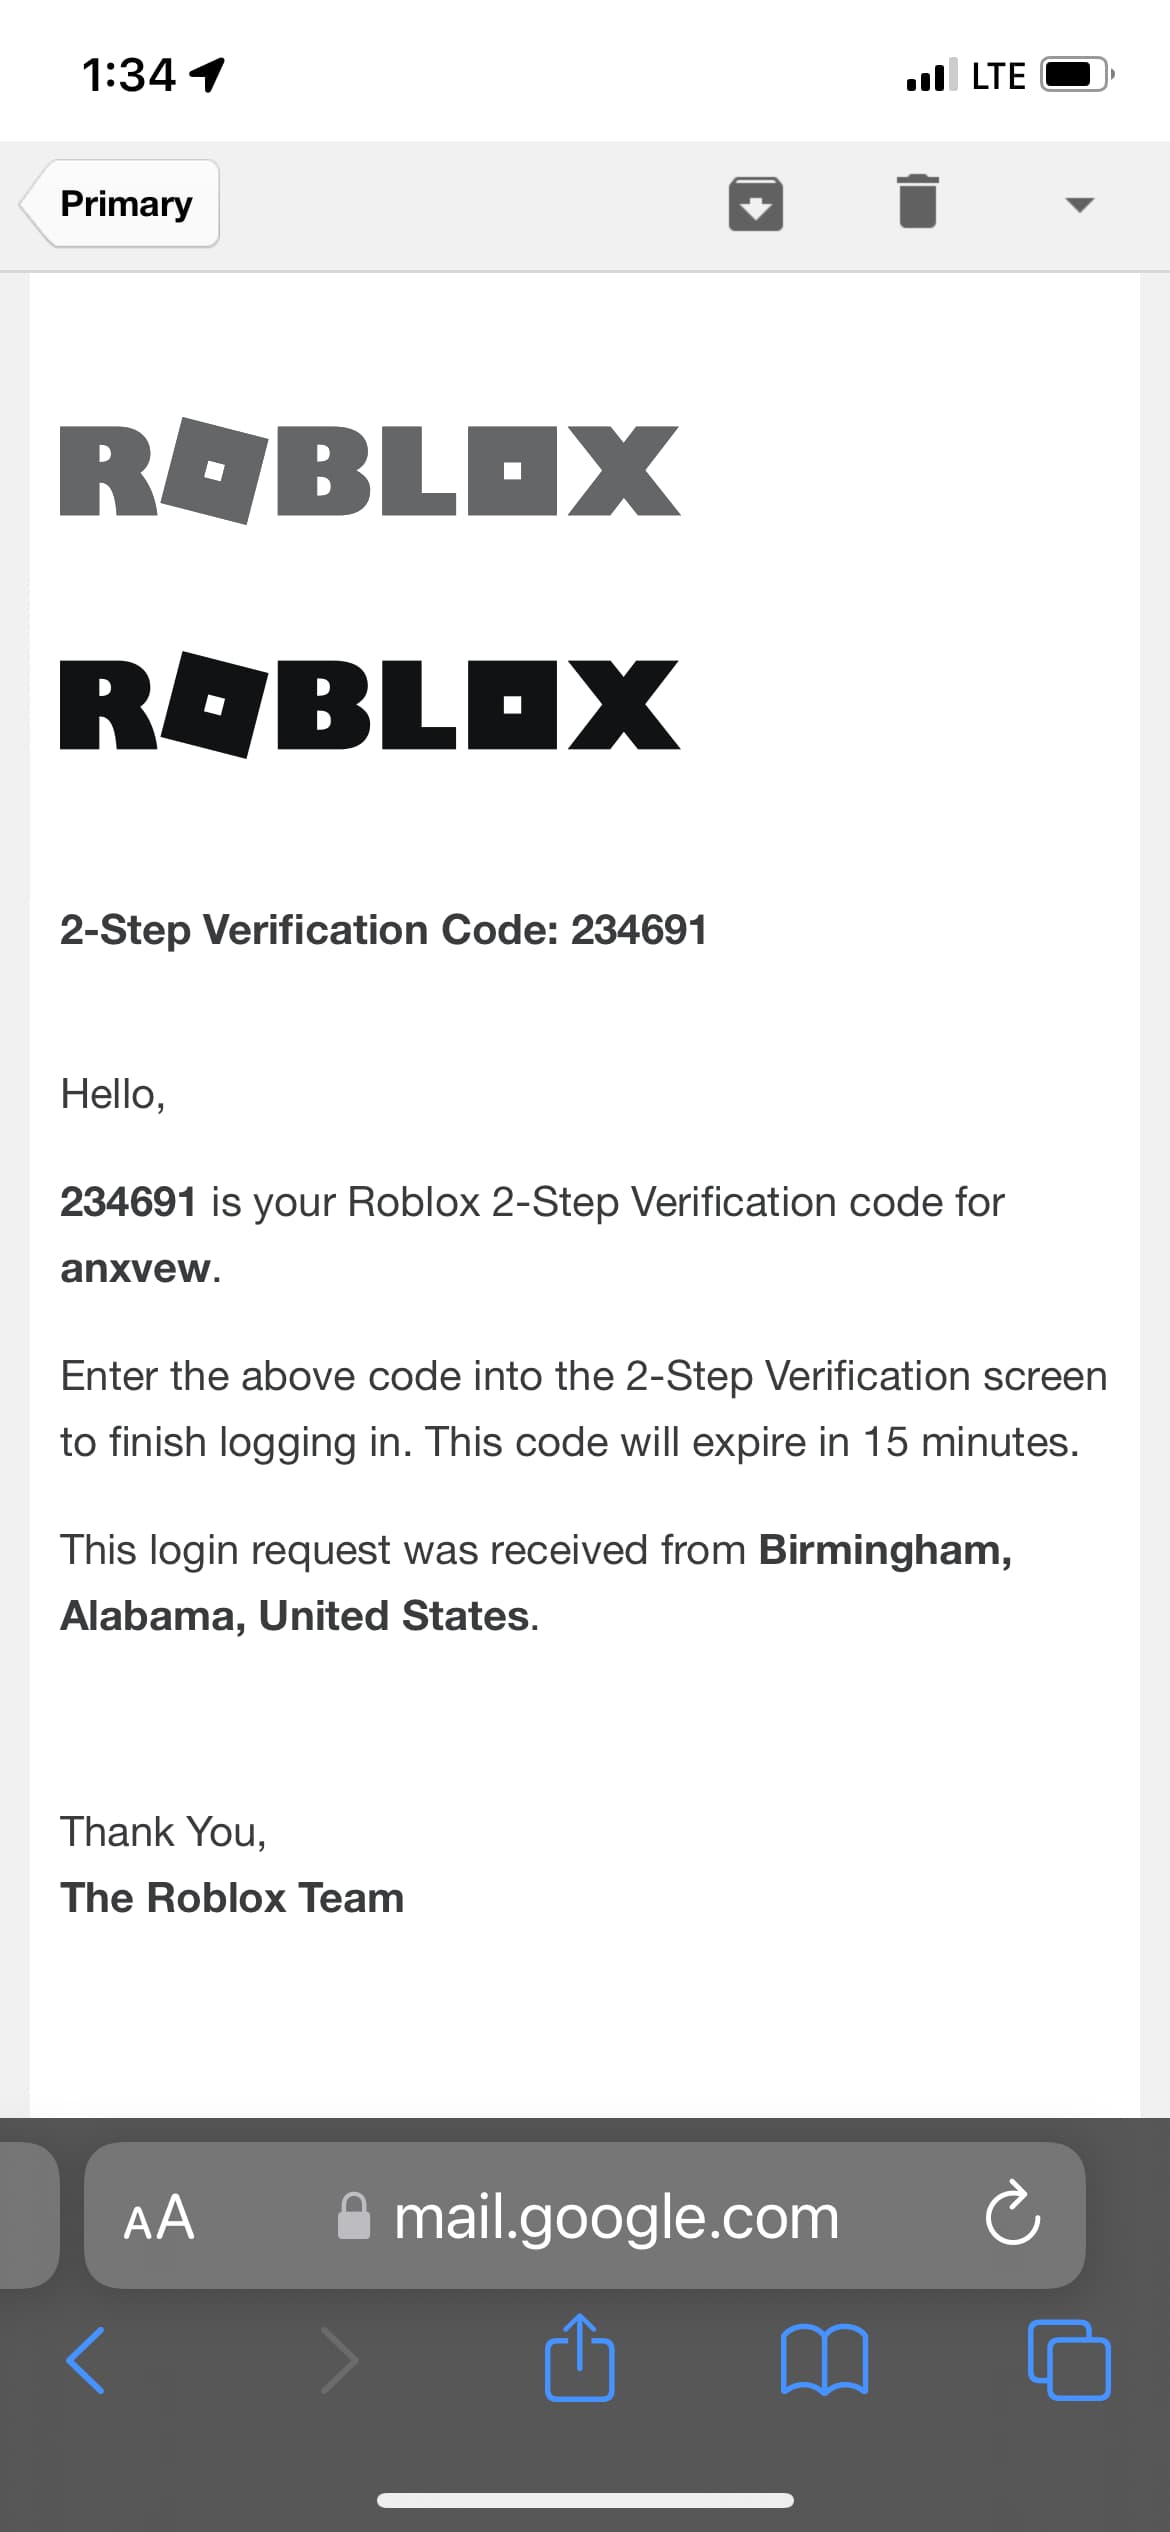 Verified - Roblox